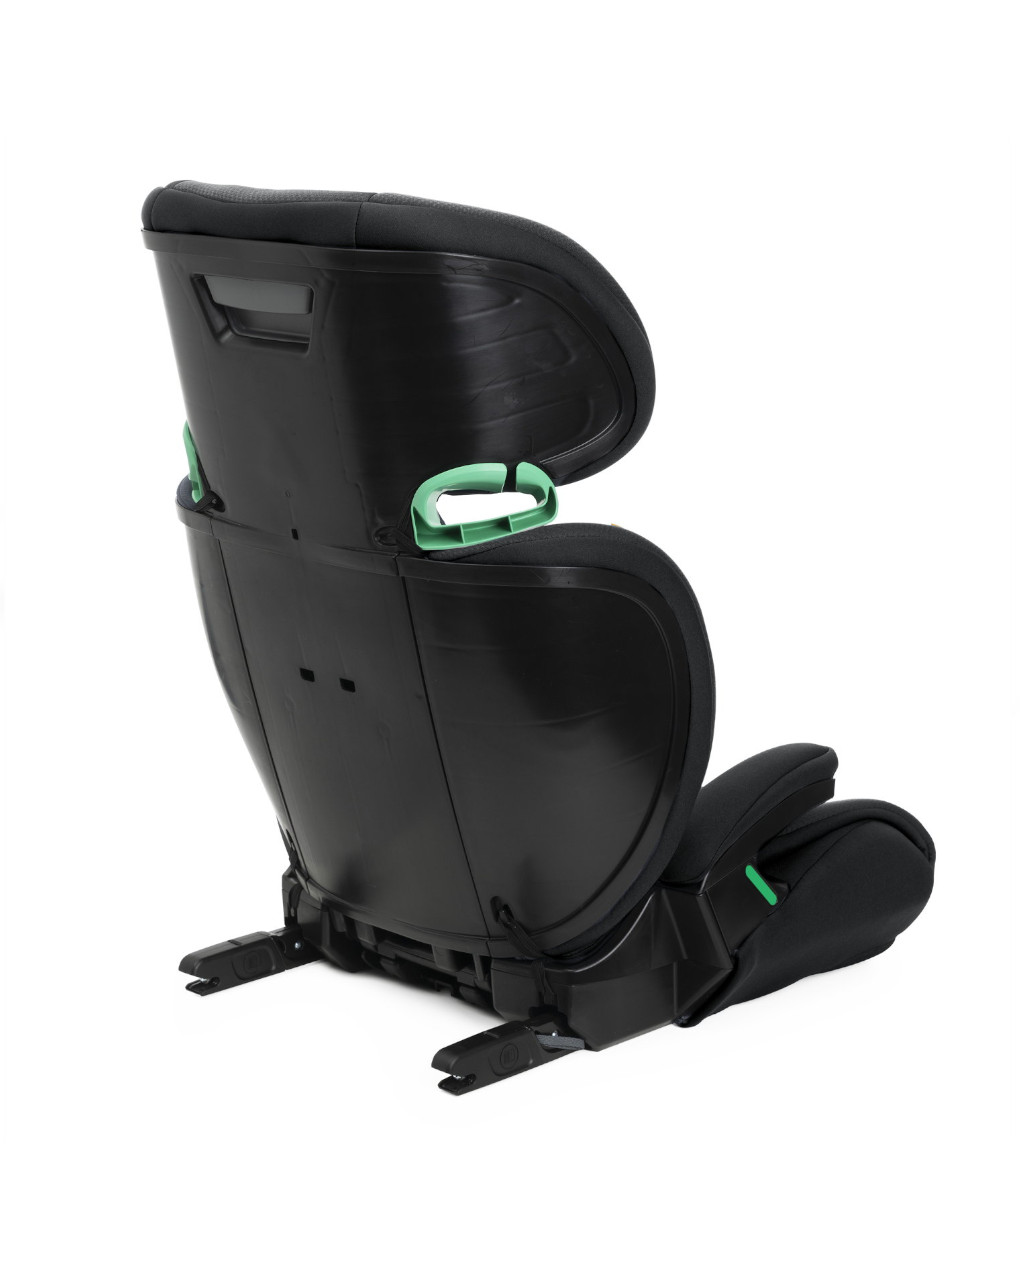 Cadeira auto quizy i-size preta (100-150 cm) - chicco - Chicco